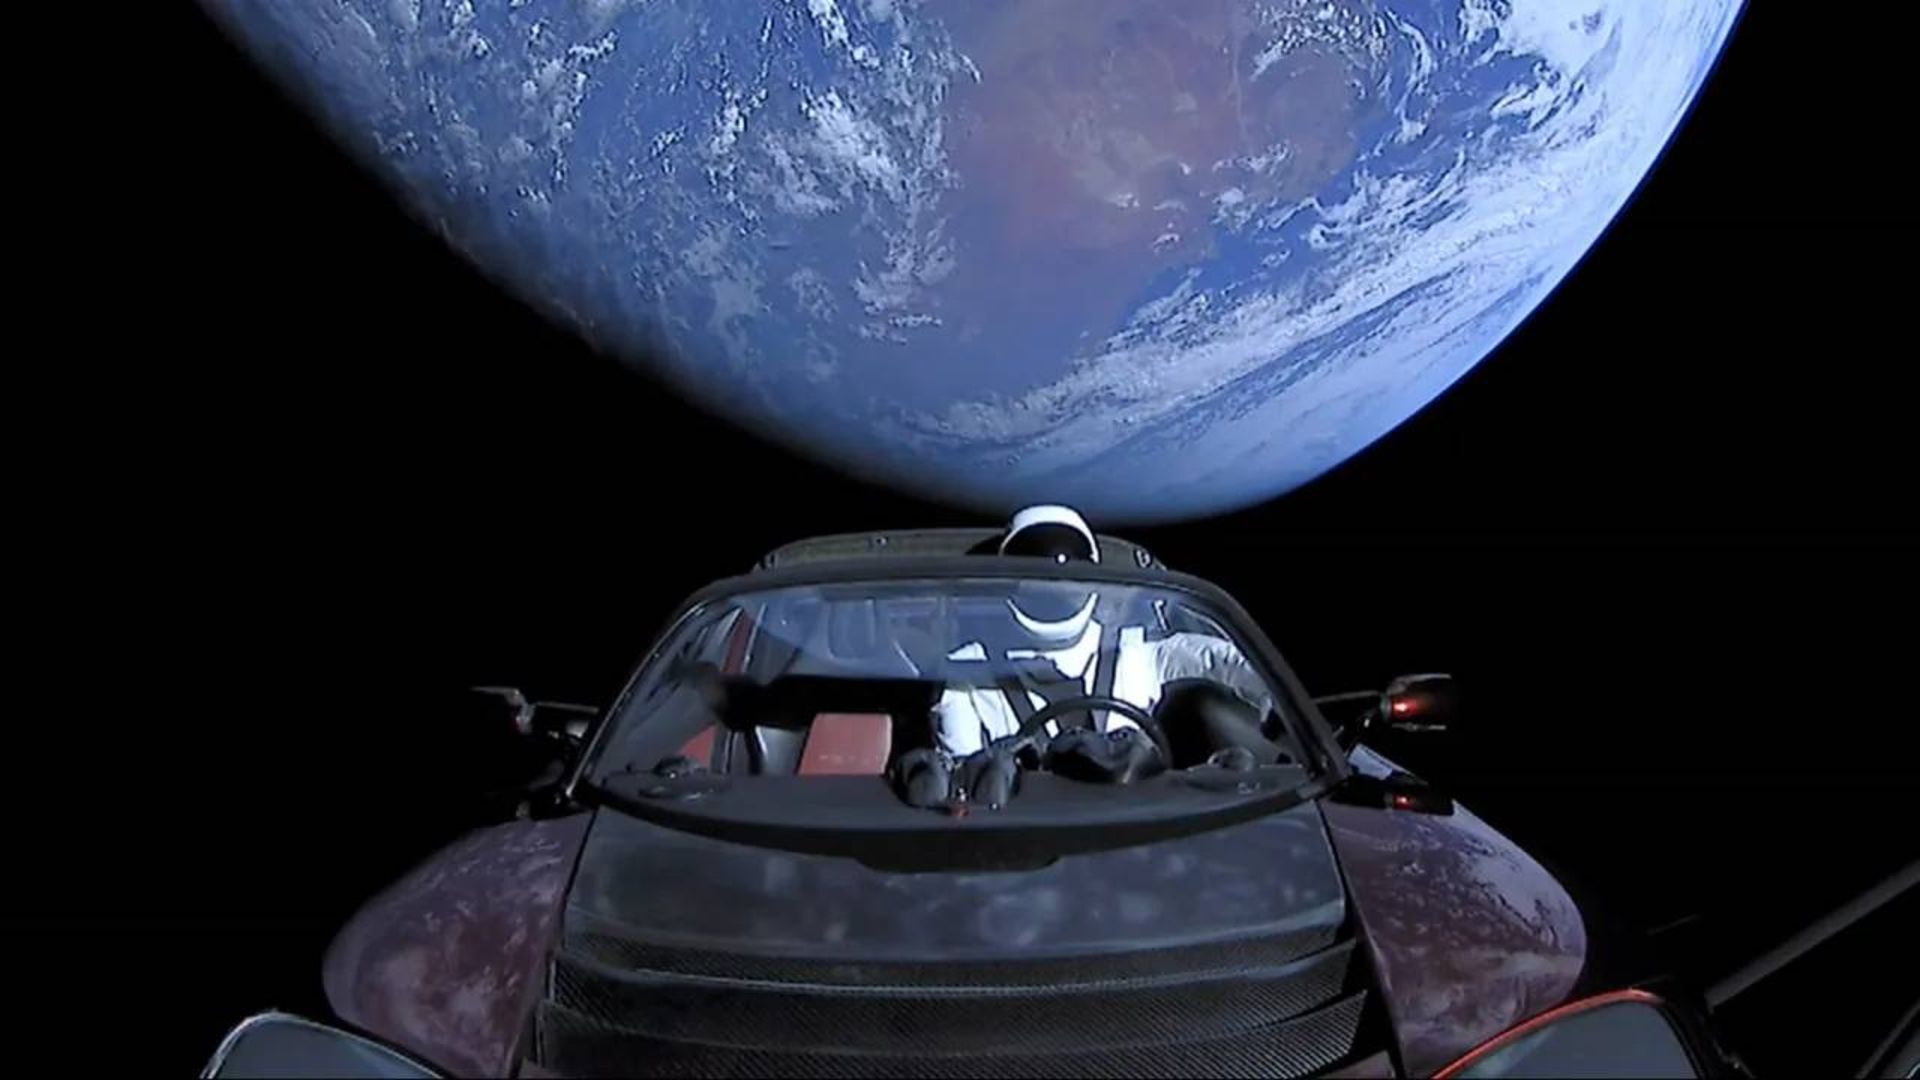 ارسال خودروی تسلا رودستر به فضا / Tesla roadster